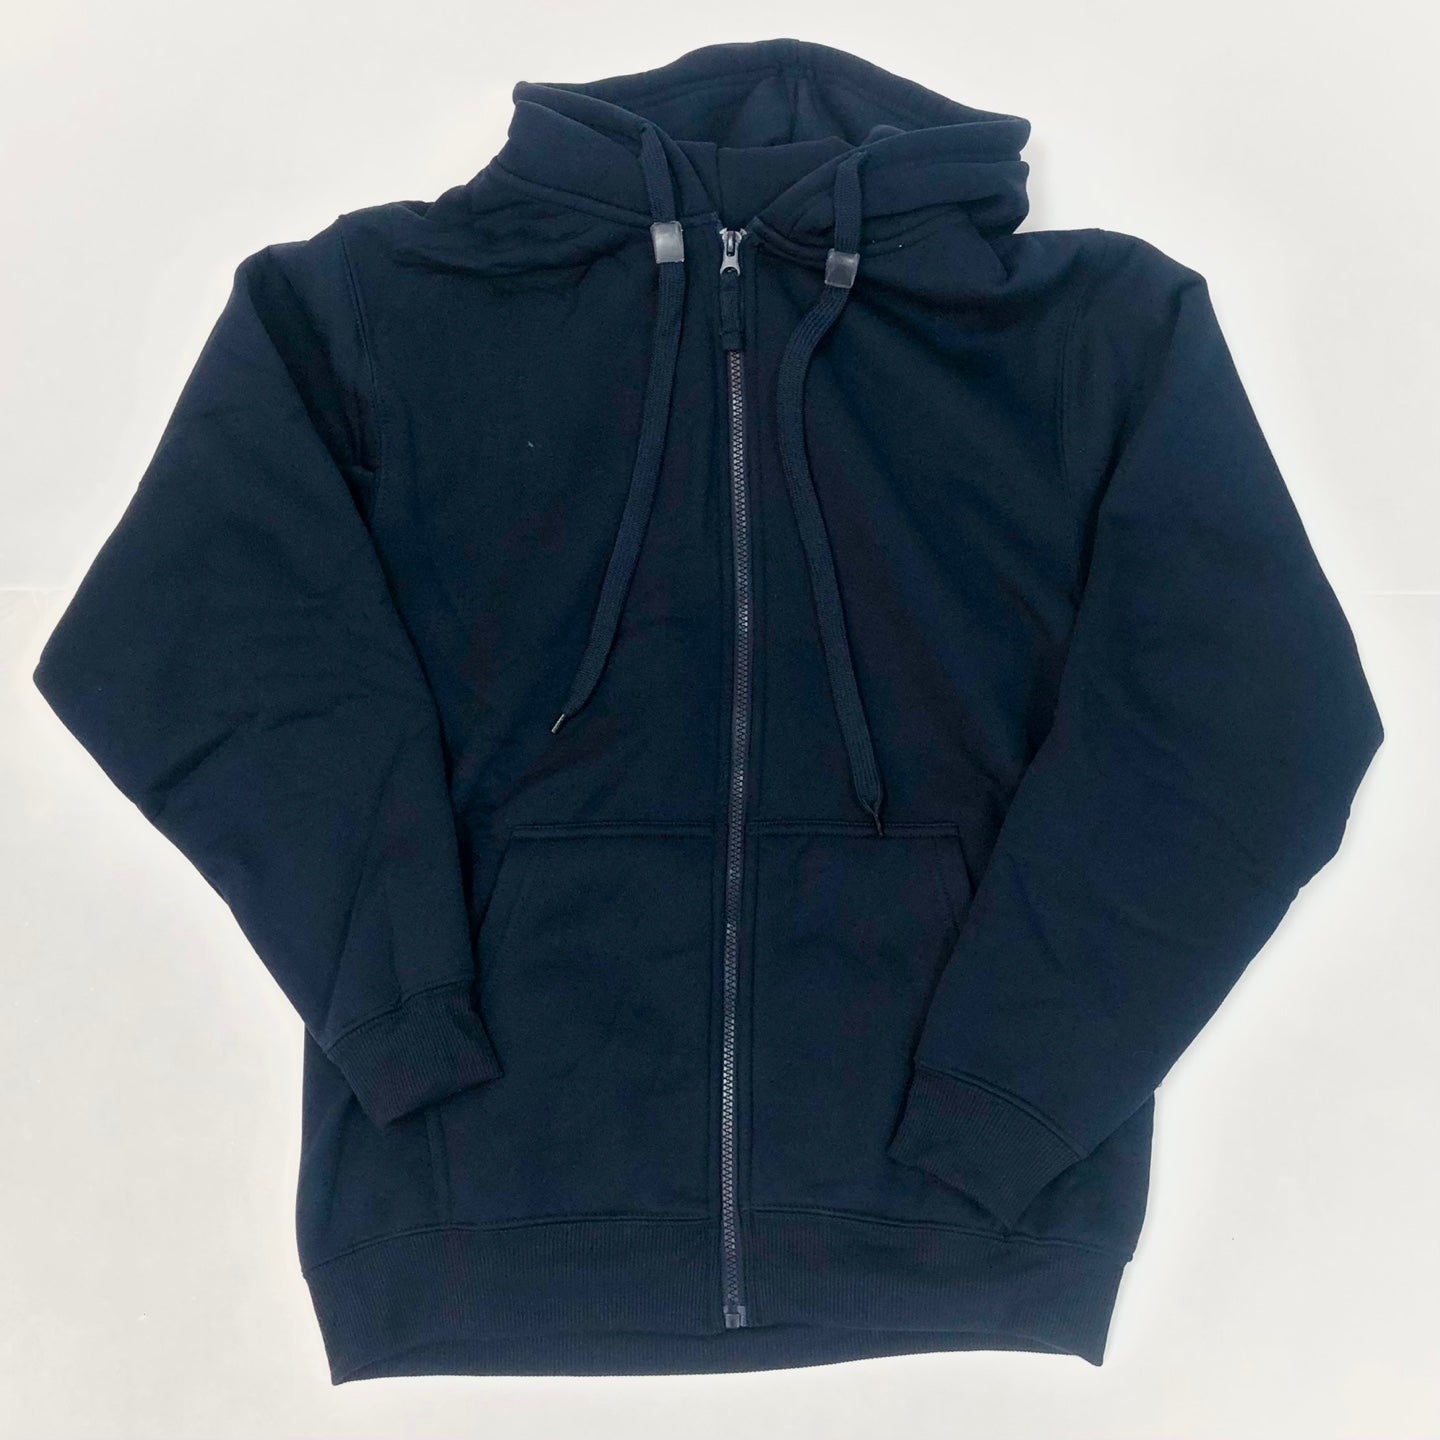 Basic Zip Up Fleece Hoodie Jacket (5 Colors)